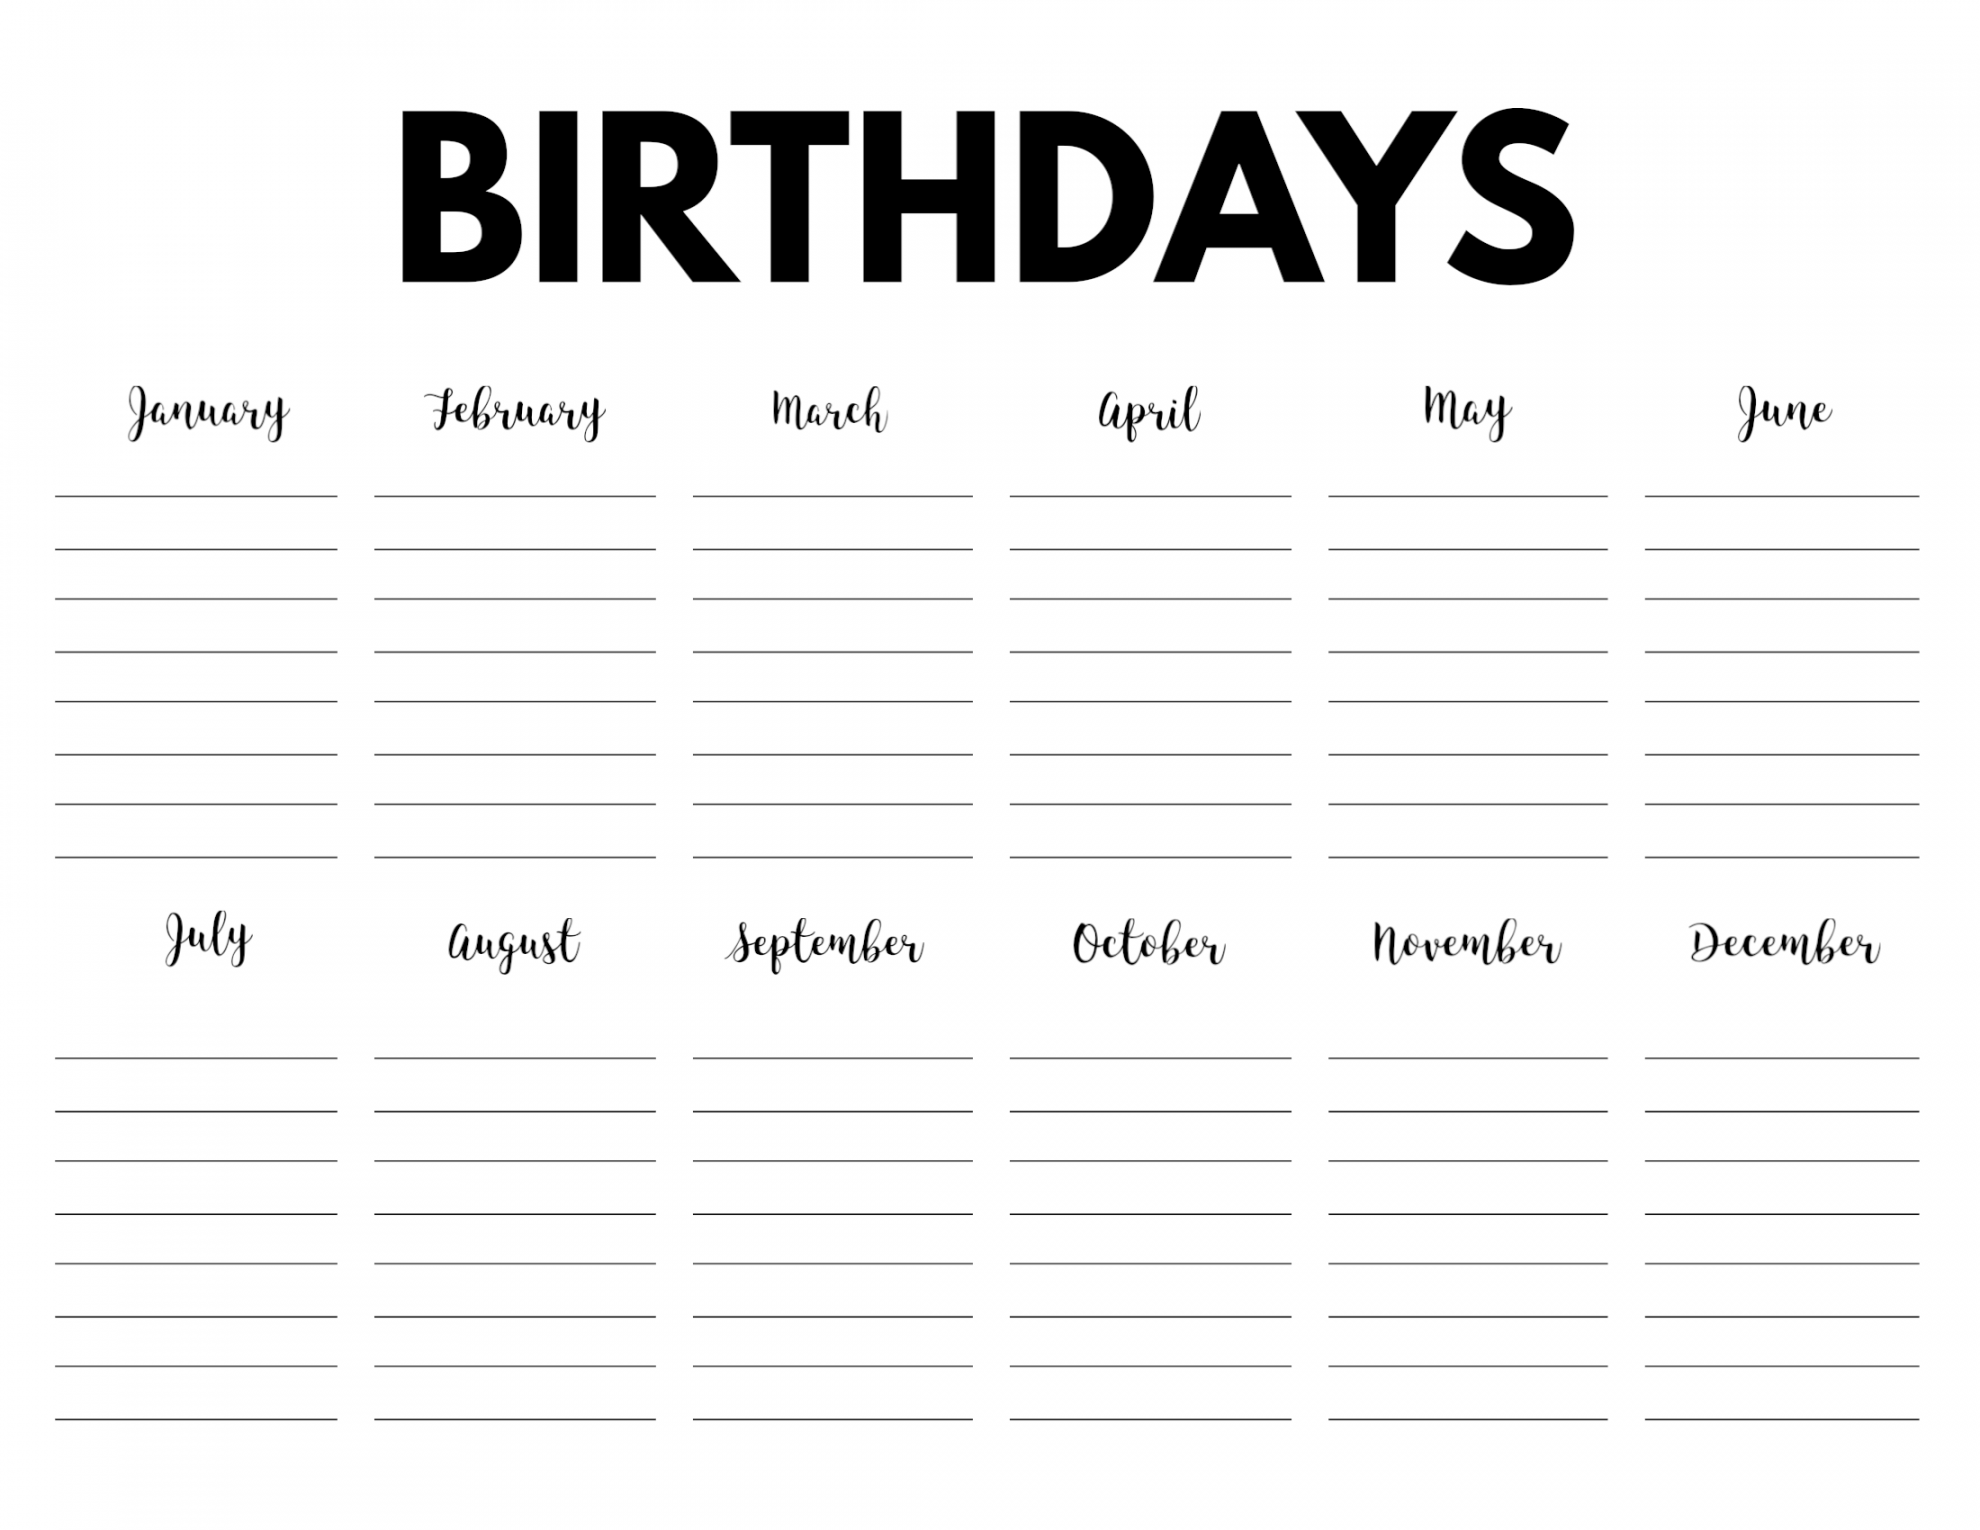 Free Printable Birthday Calendar Template - Paper Trail Design - FREE Printables - Free Printable Birthday Calendar